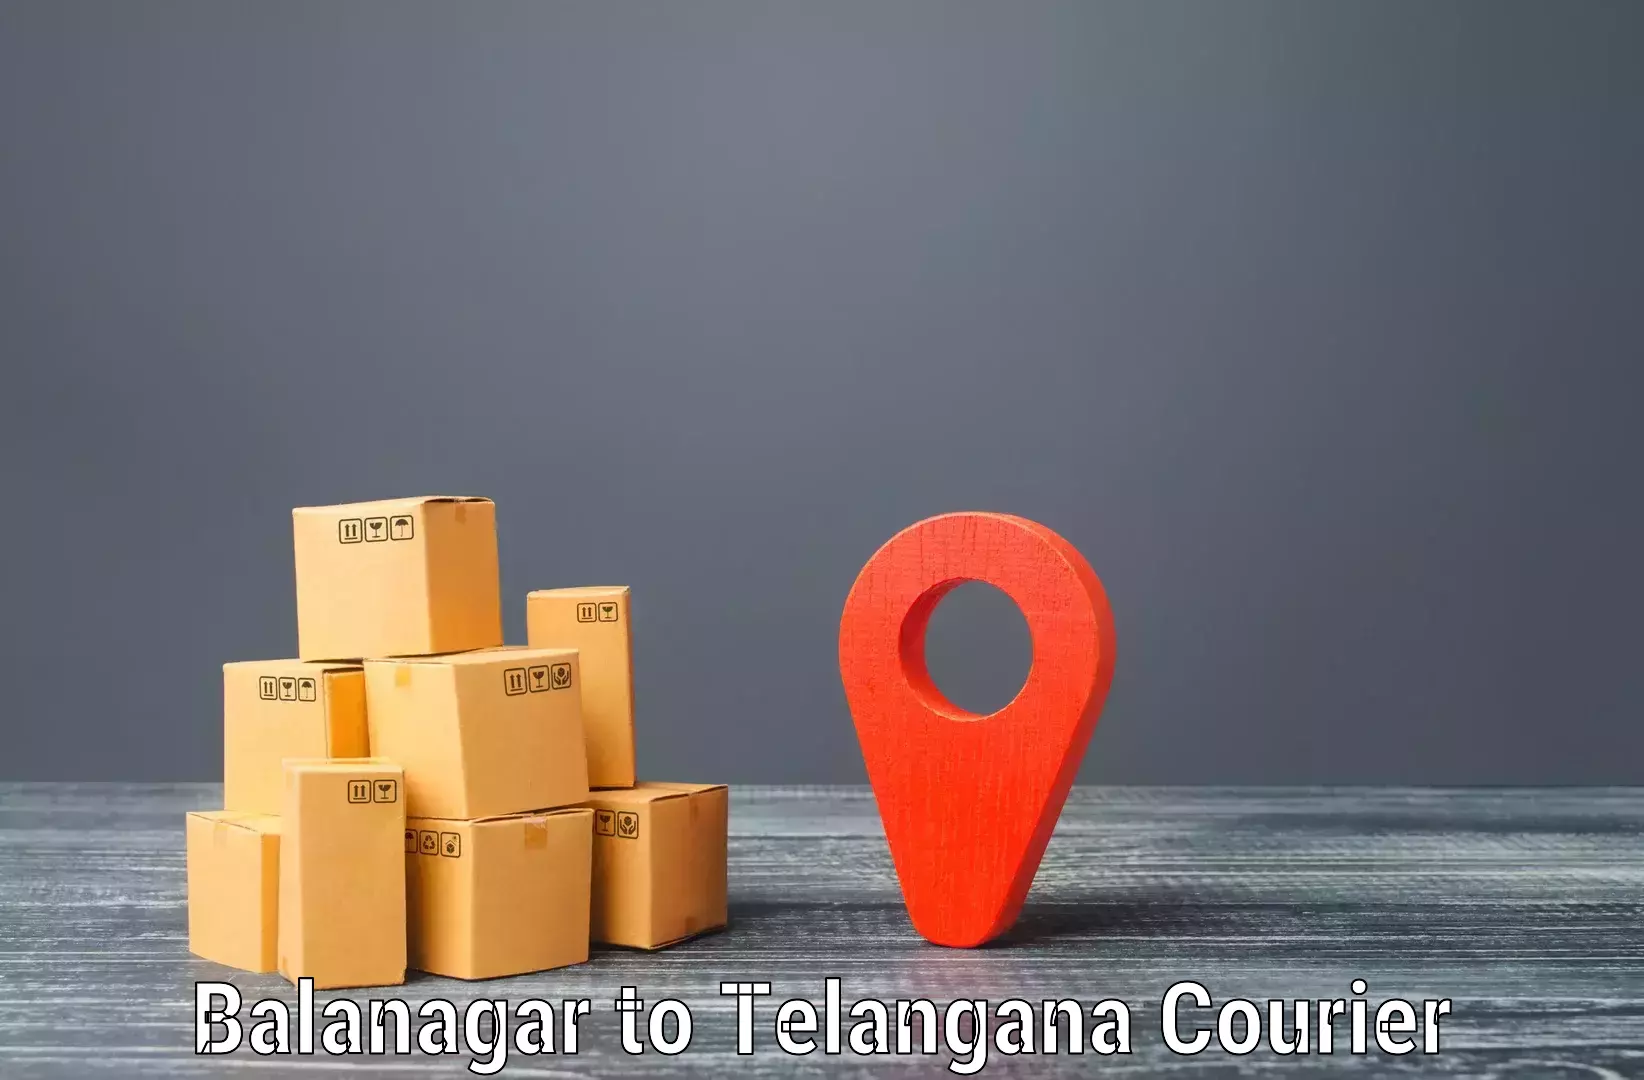 Urgent courier needs Balanagar to Hanamkonda